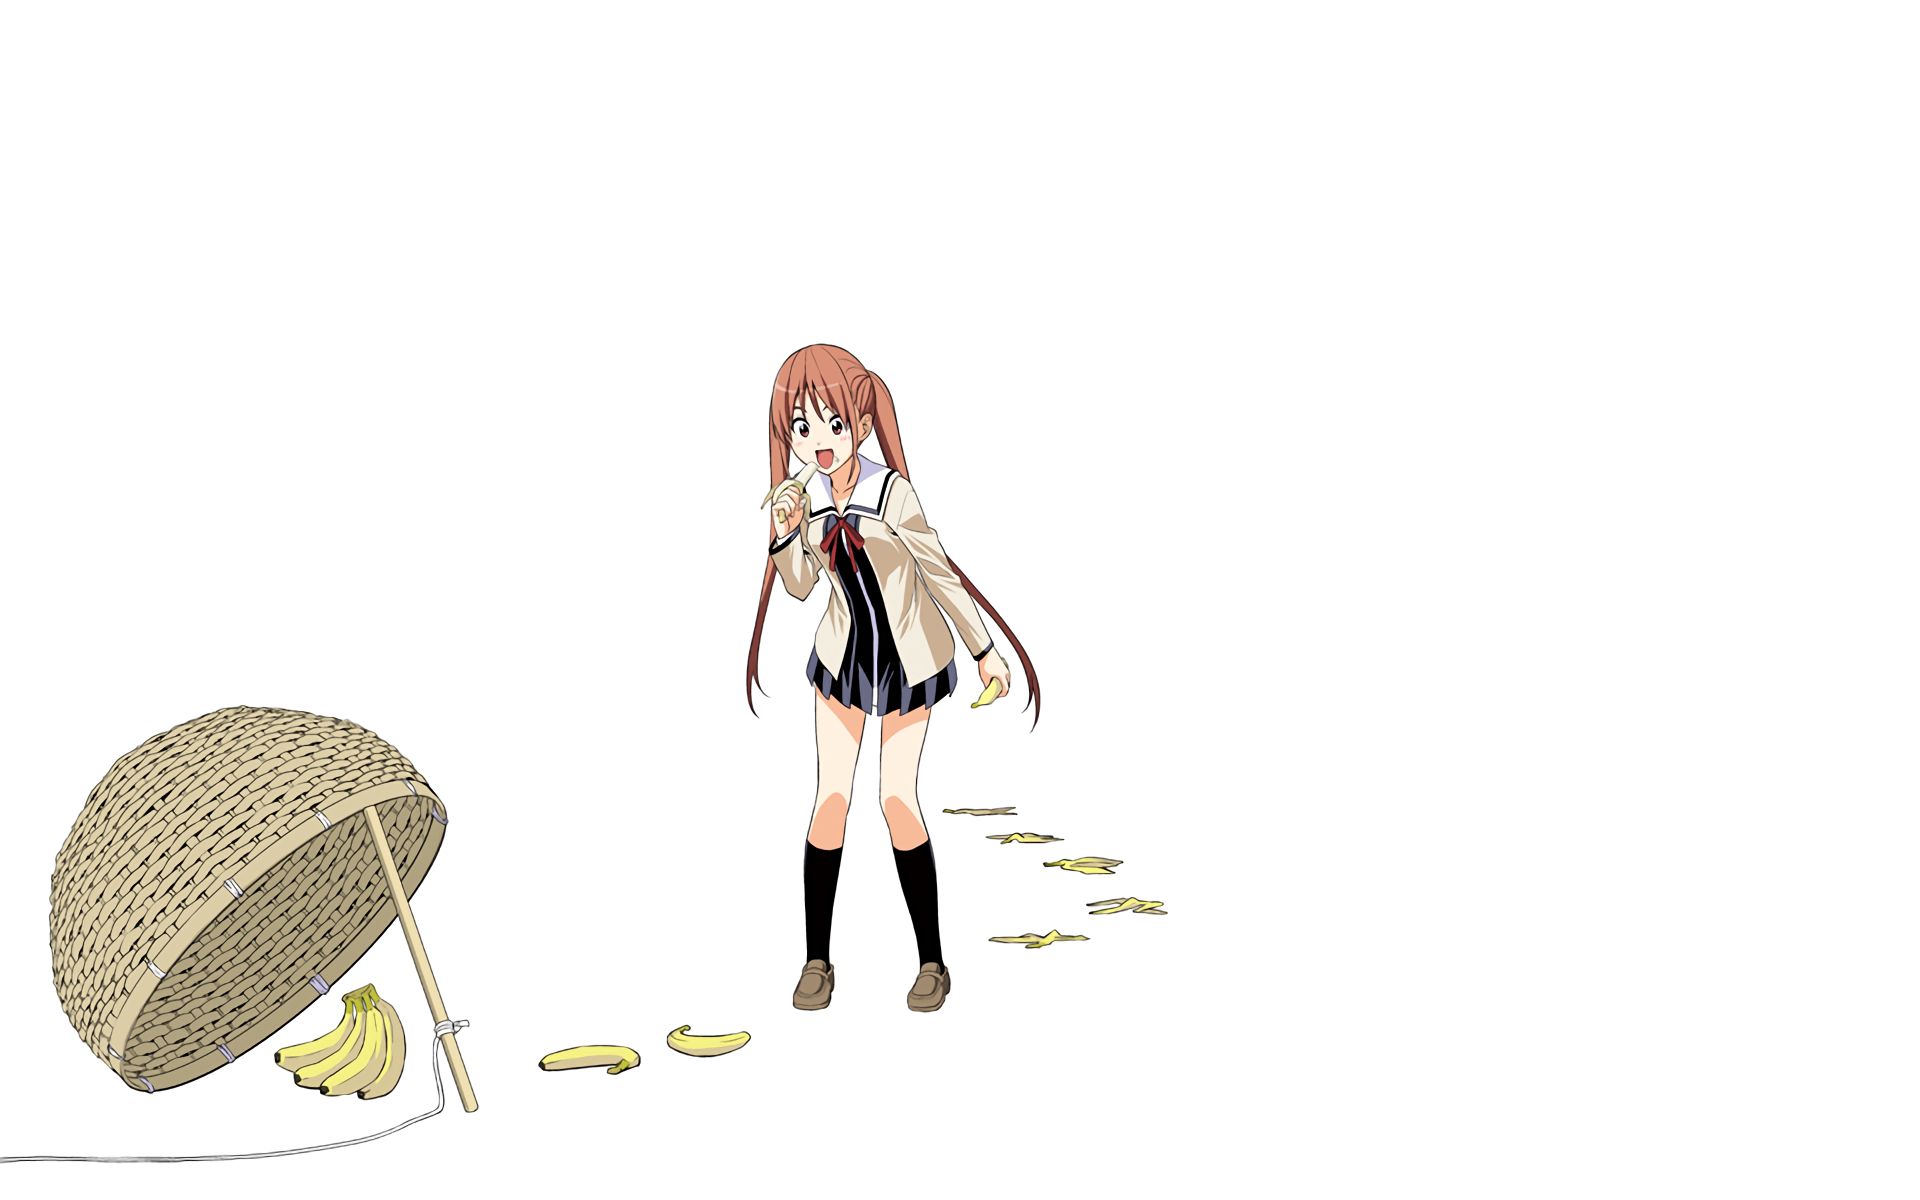 840275 descargar imagen animado, aho girl, yoshiko hanabatake: fondos de pantalla y protectores de pantalla gratis